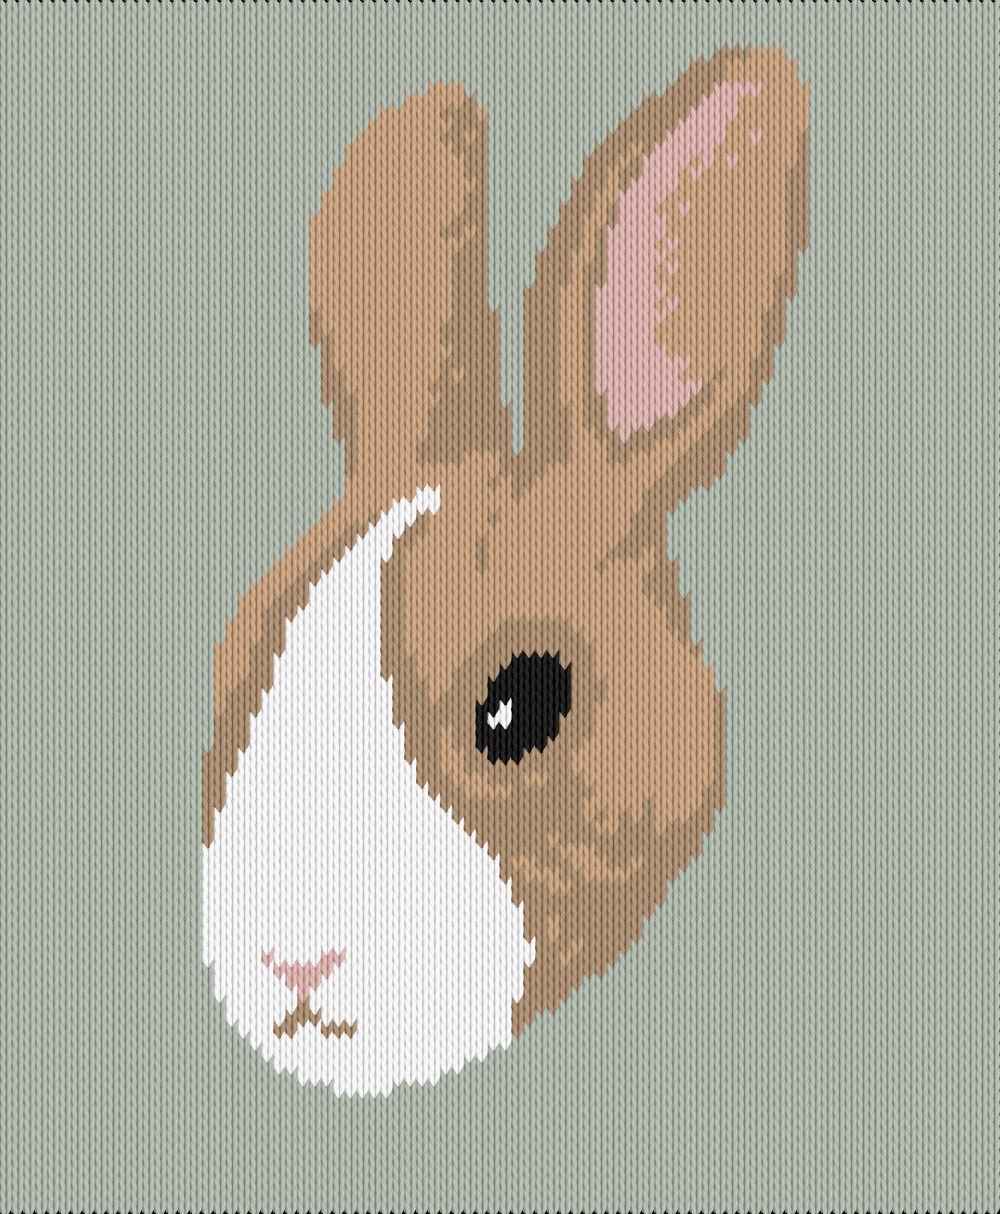 Knitting motif chart, bunny face